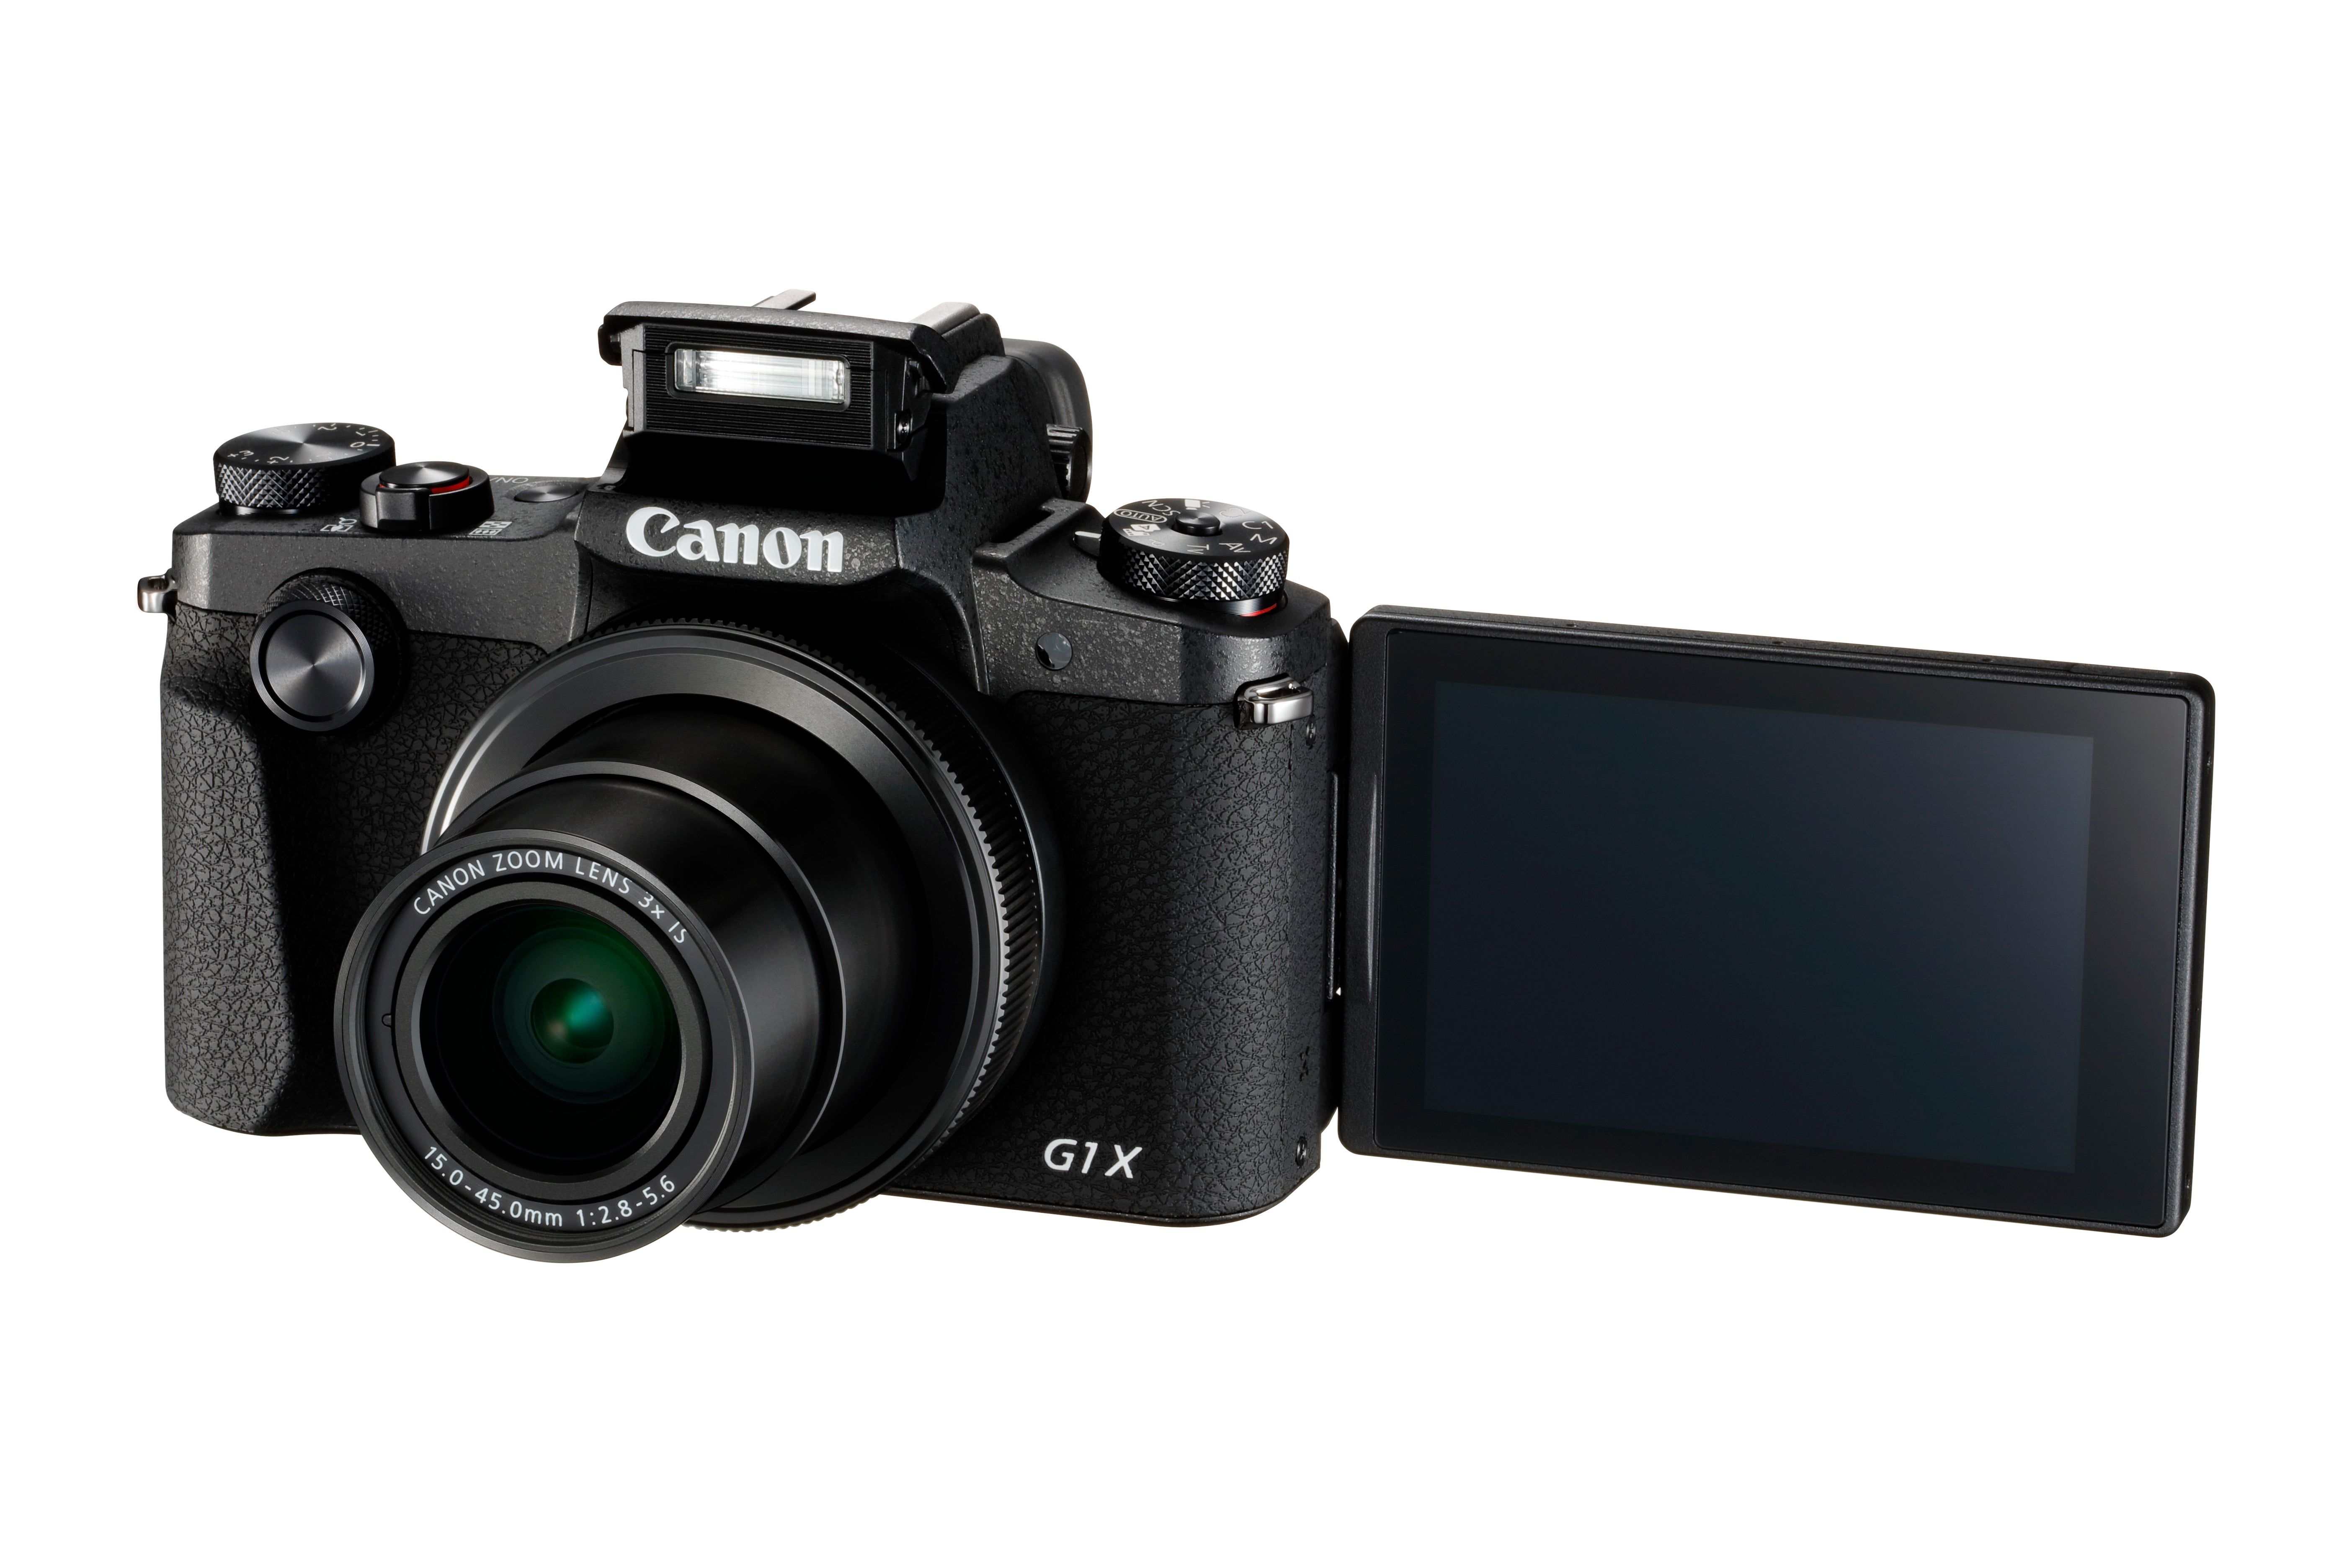 Canon Powershot G1 X Mark III Camera numérique